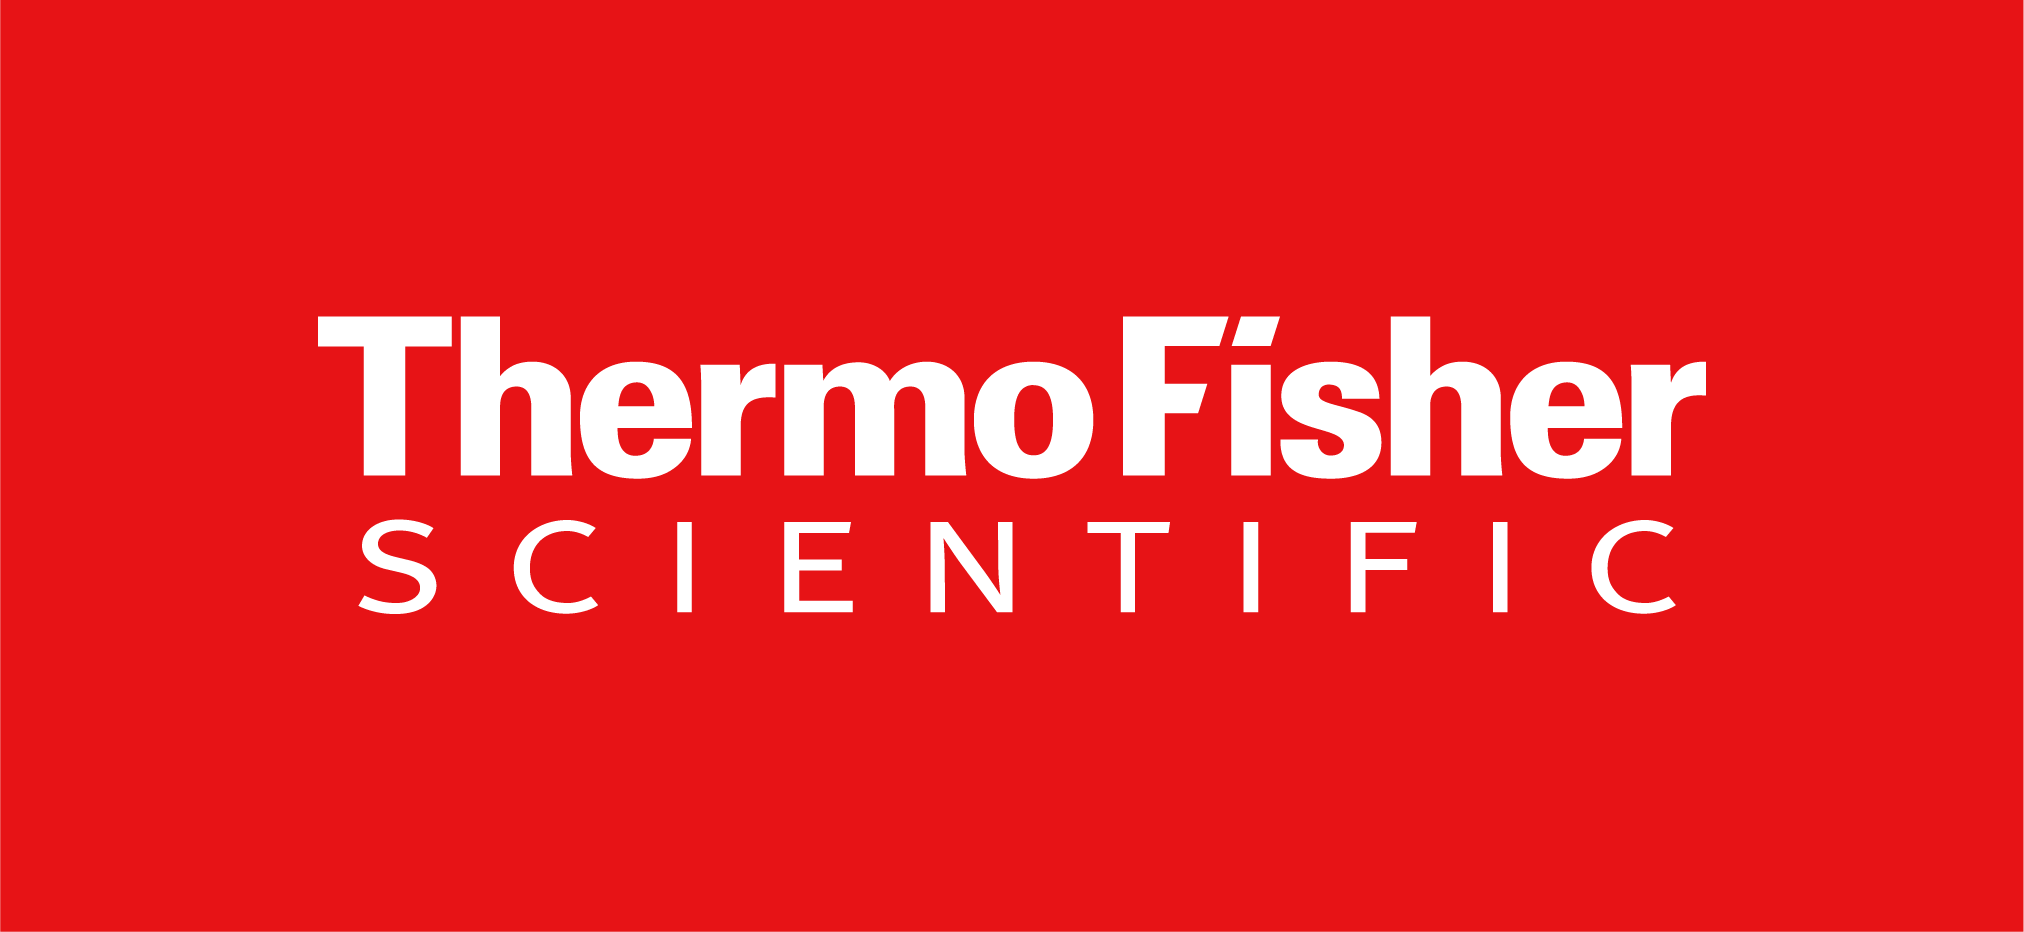 Thermo Fisher Scientific Red BG